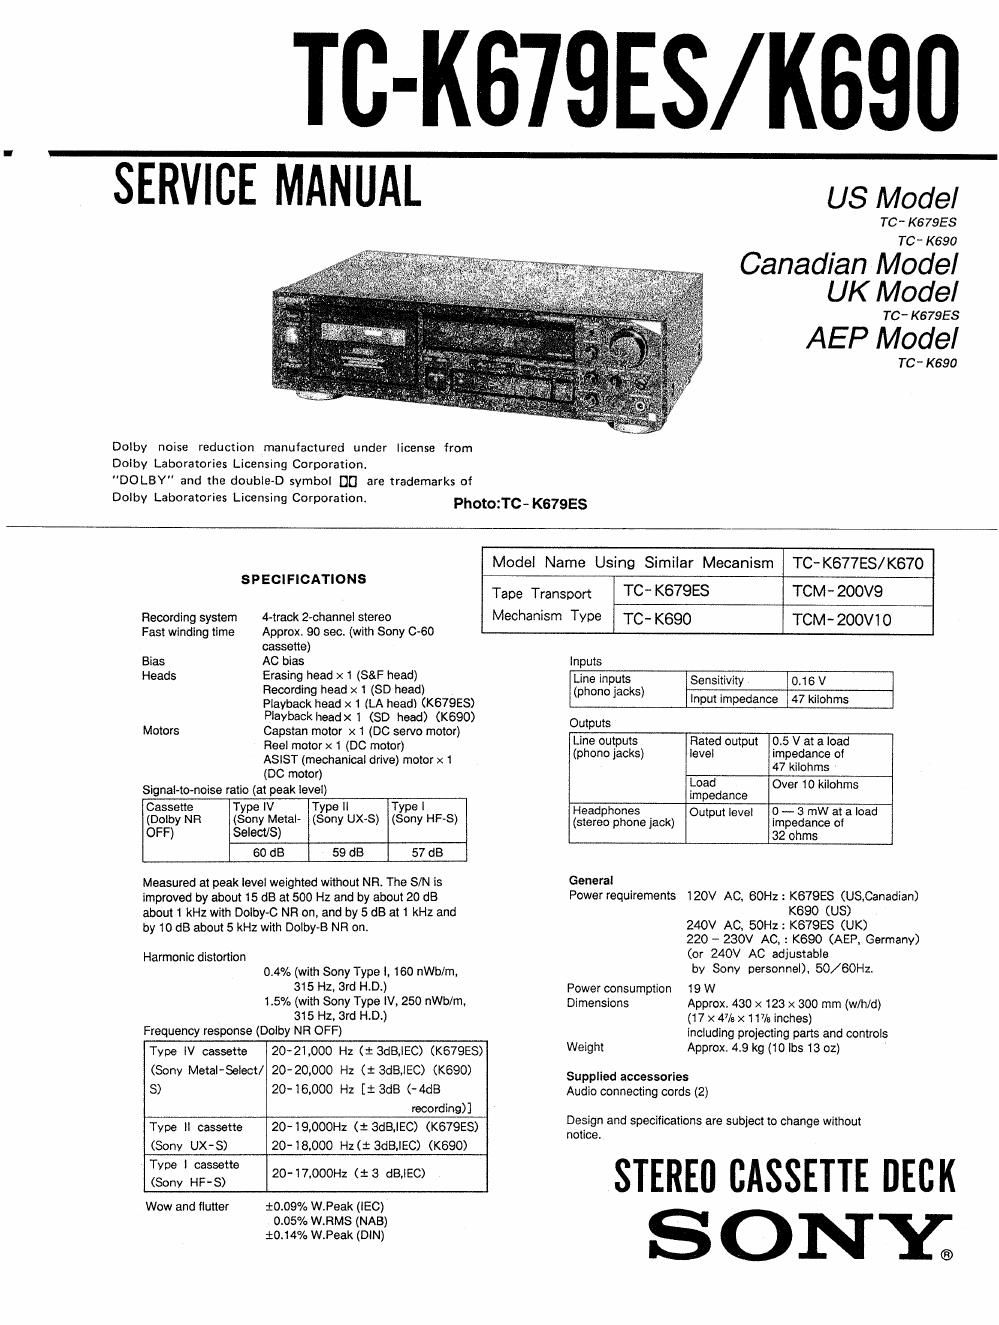 sony tc k 679 es service manual